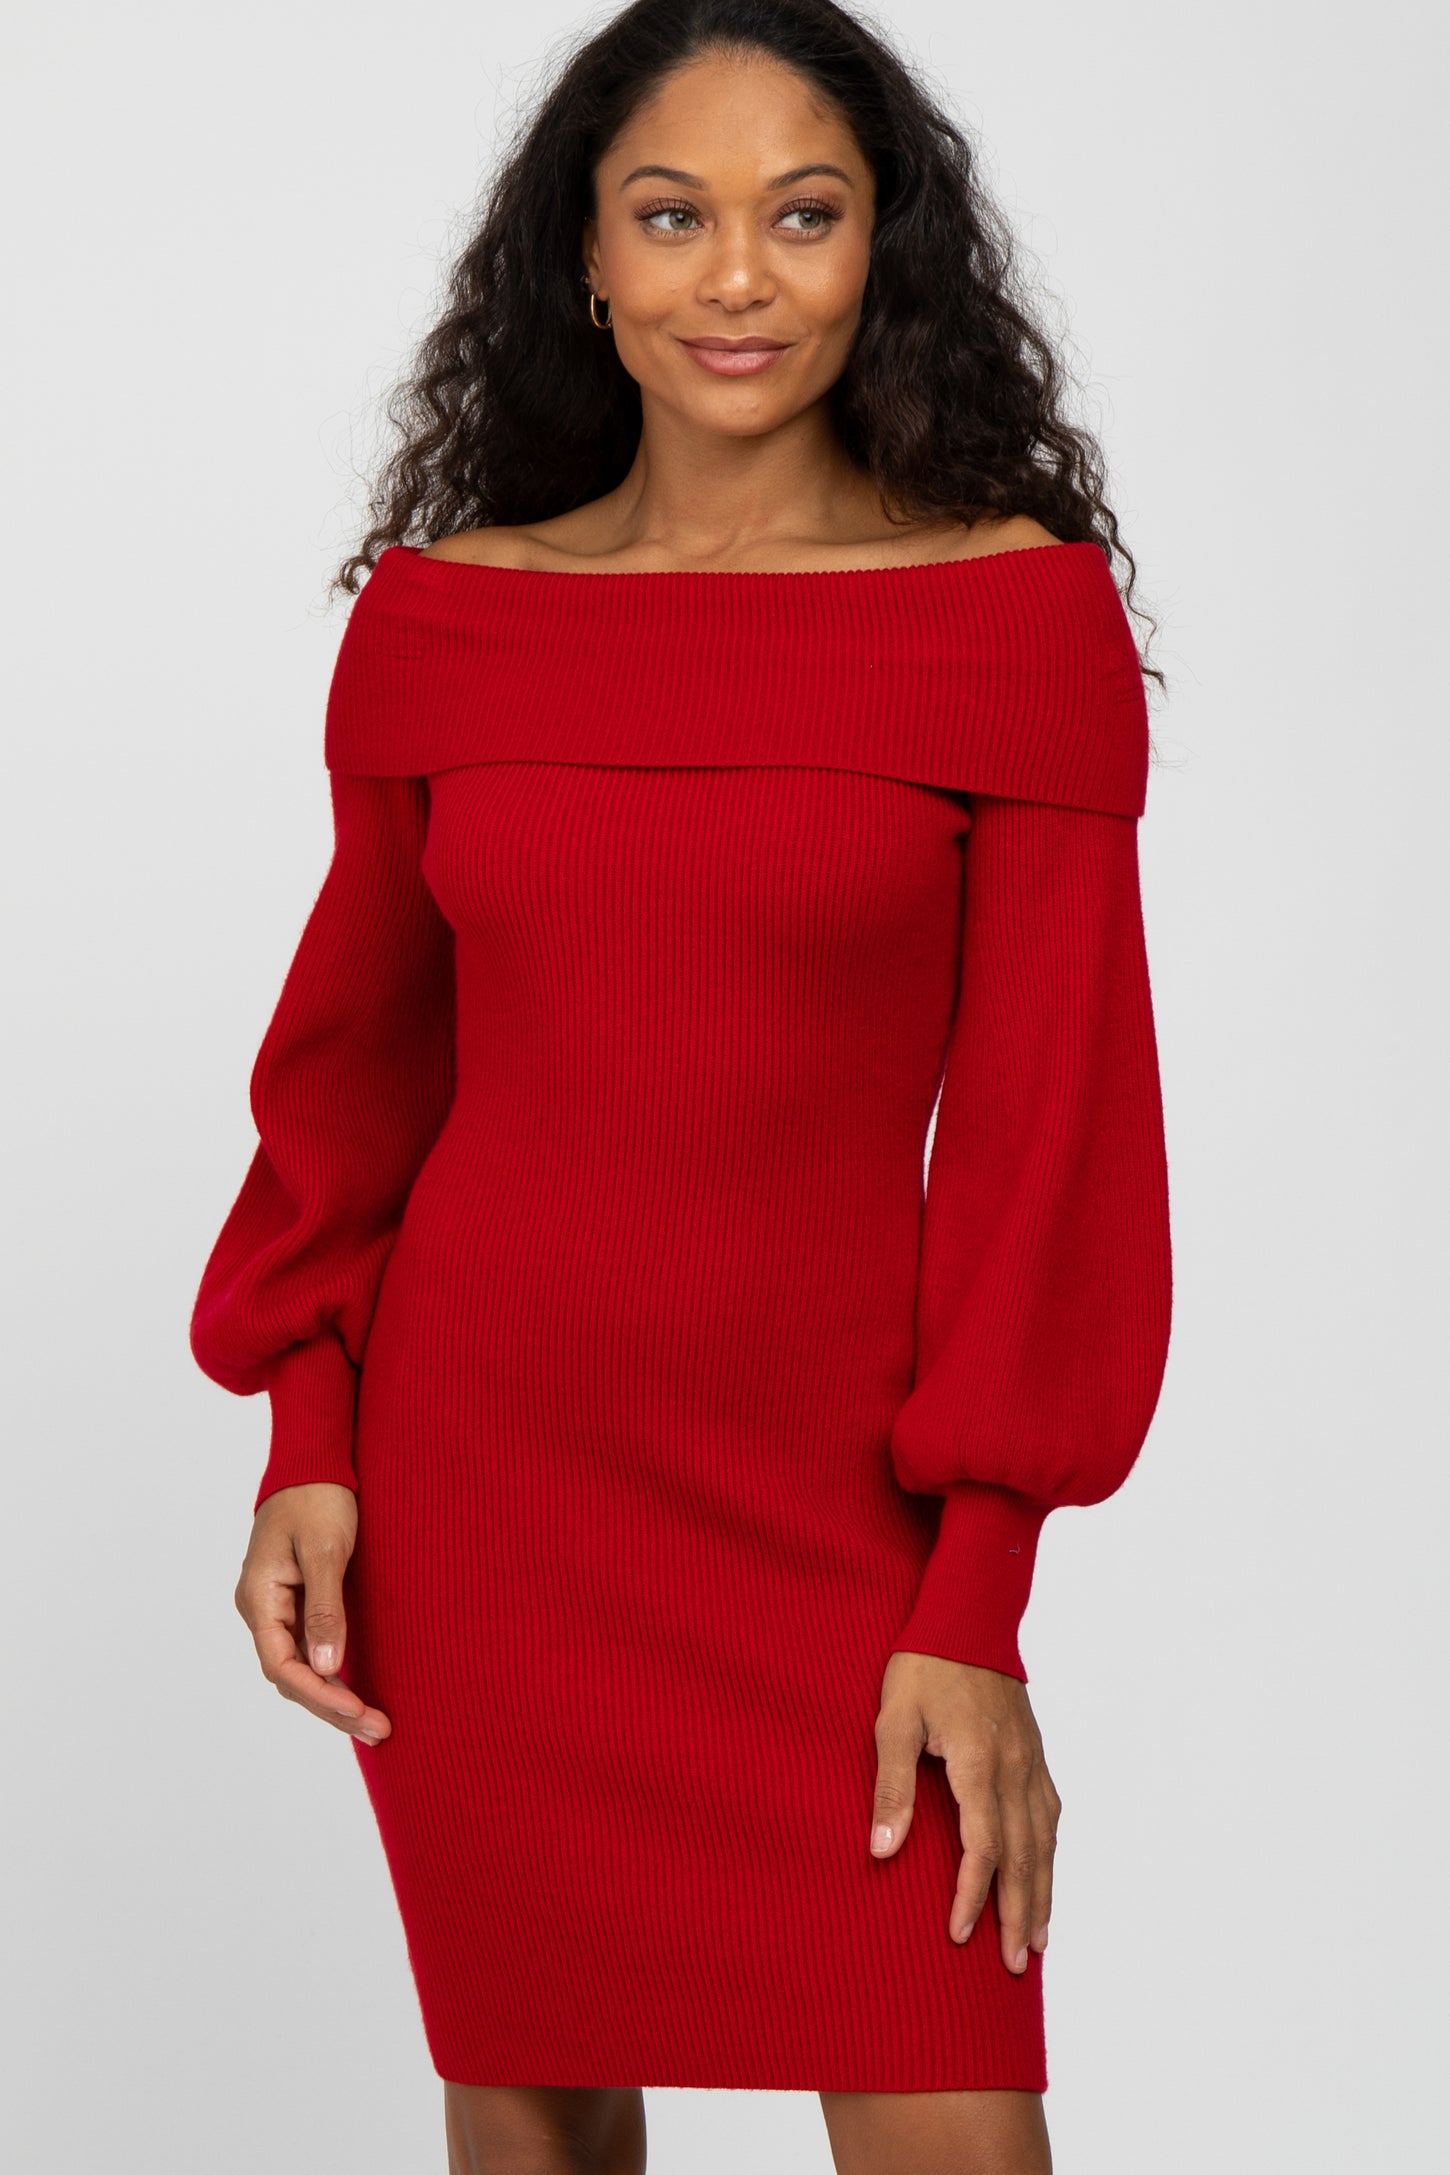 red sweater dress